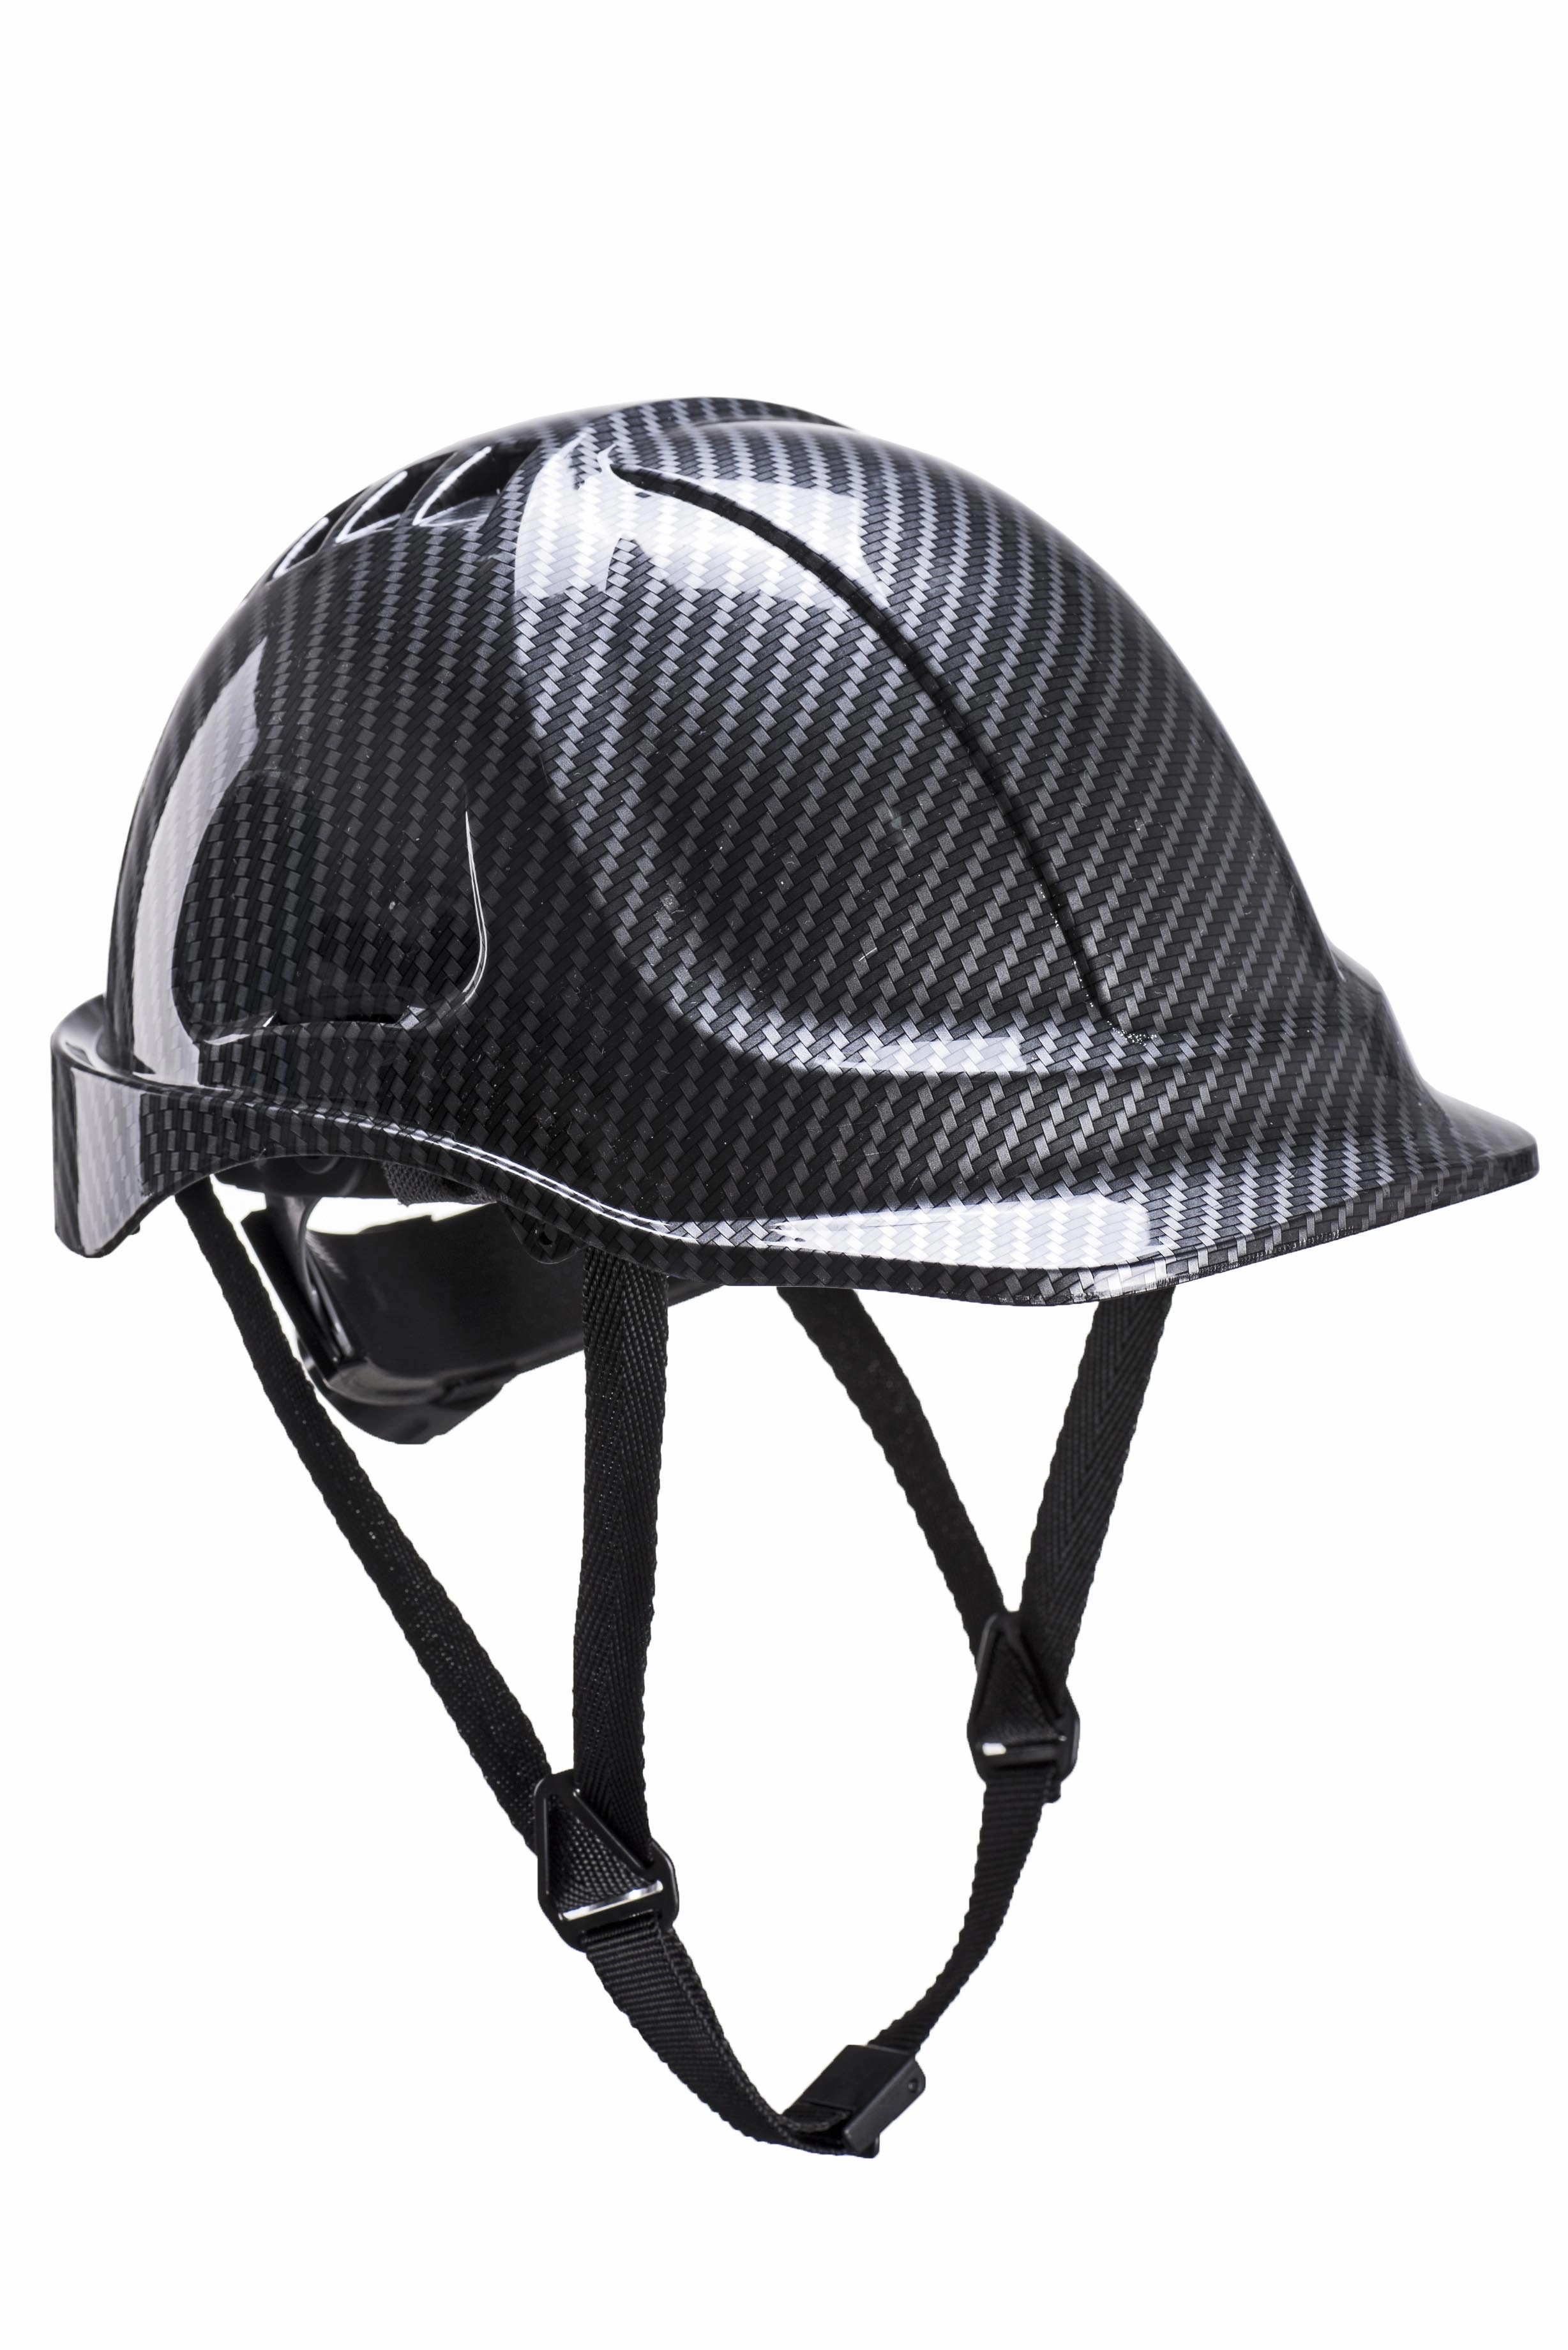 Pc55 carbon look helmet